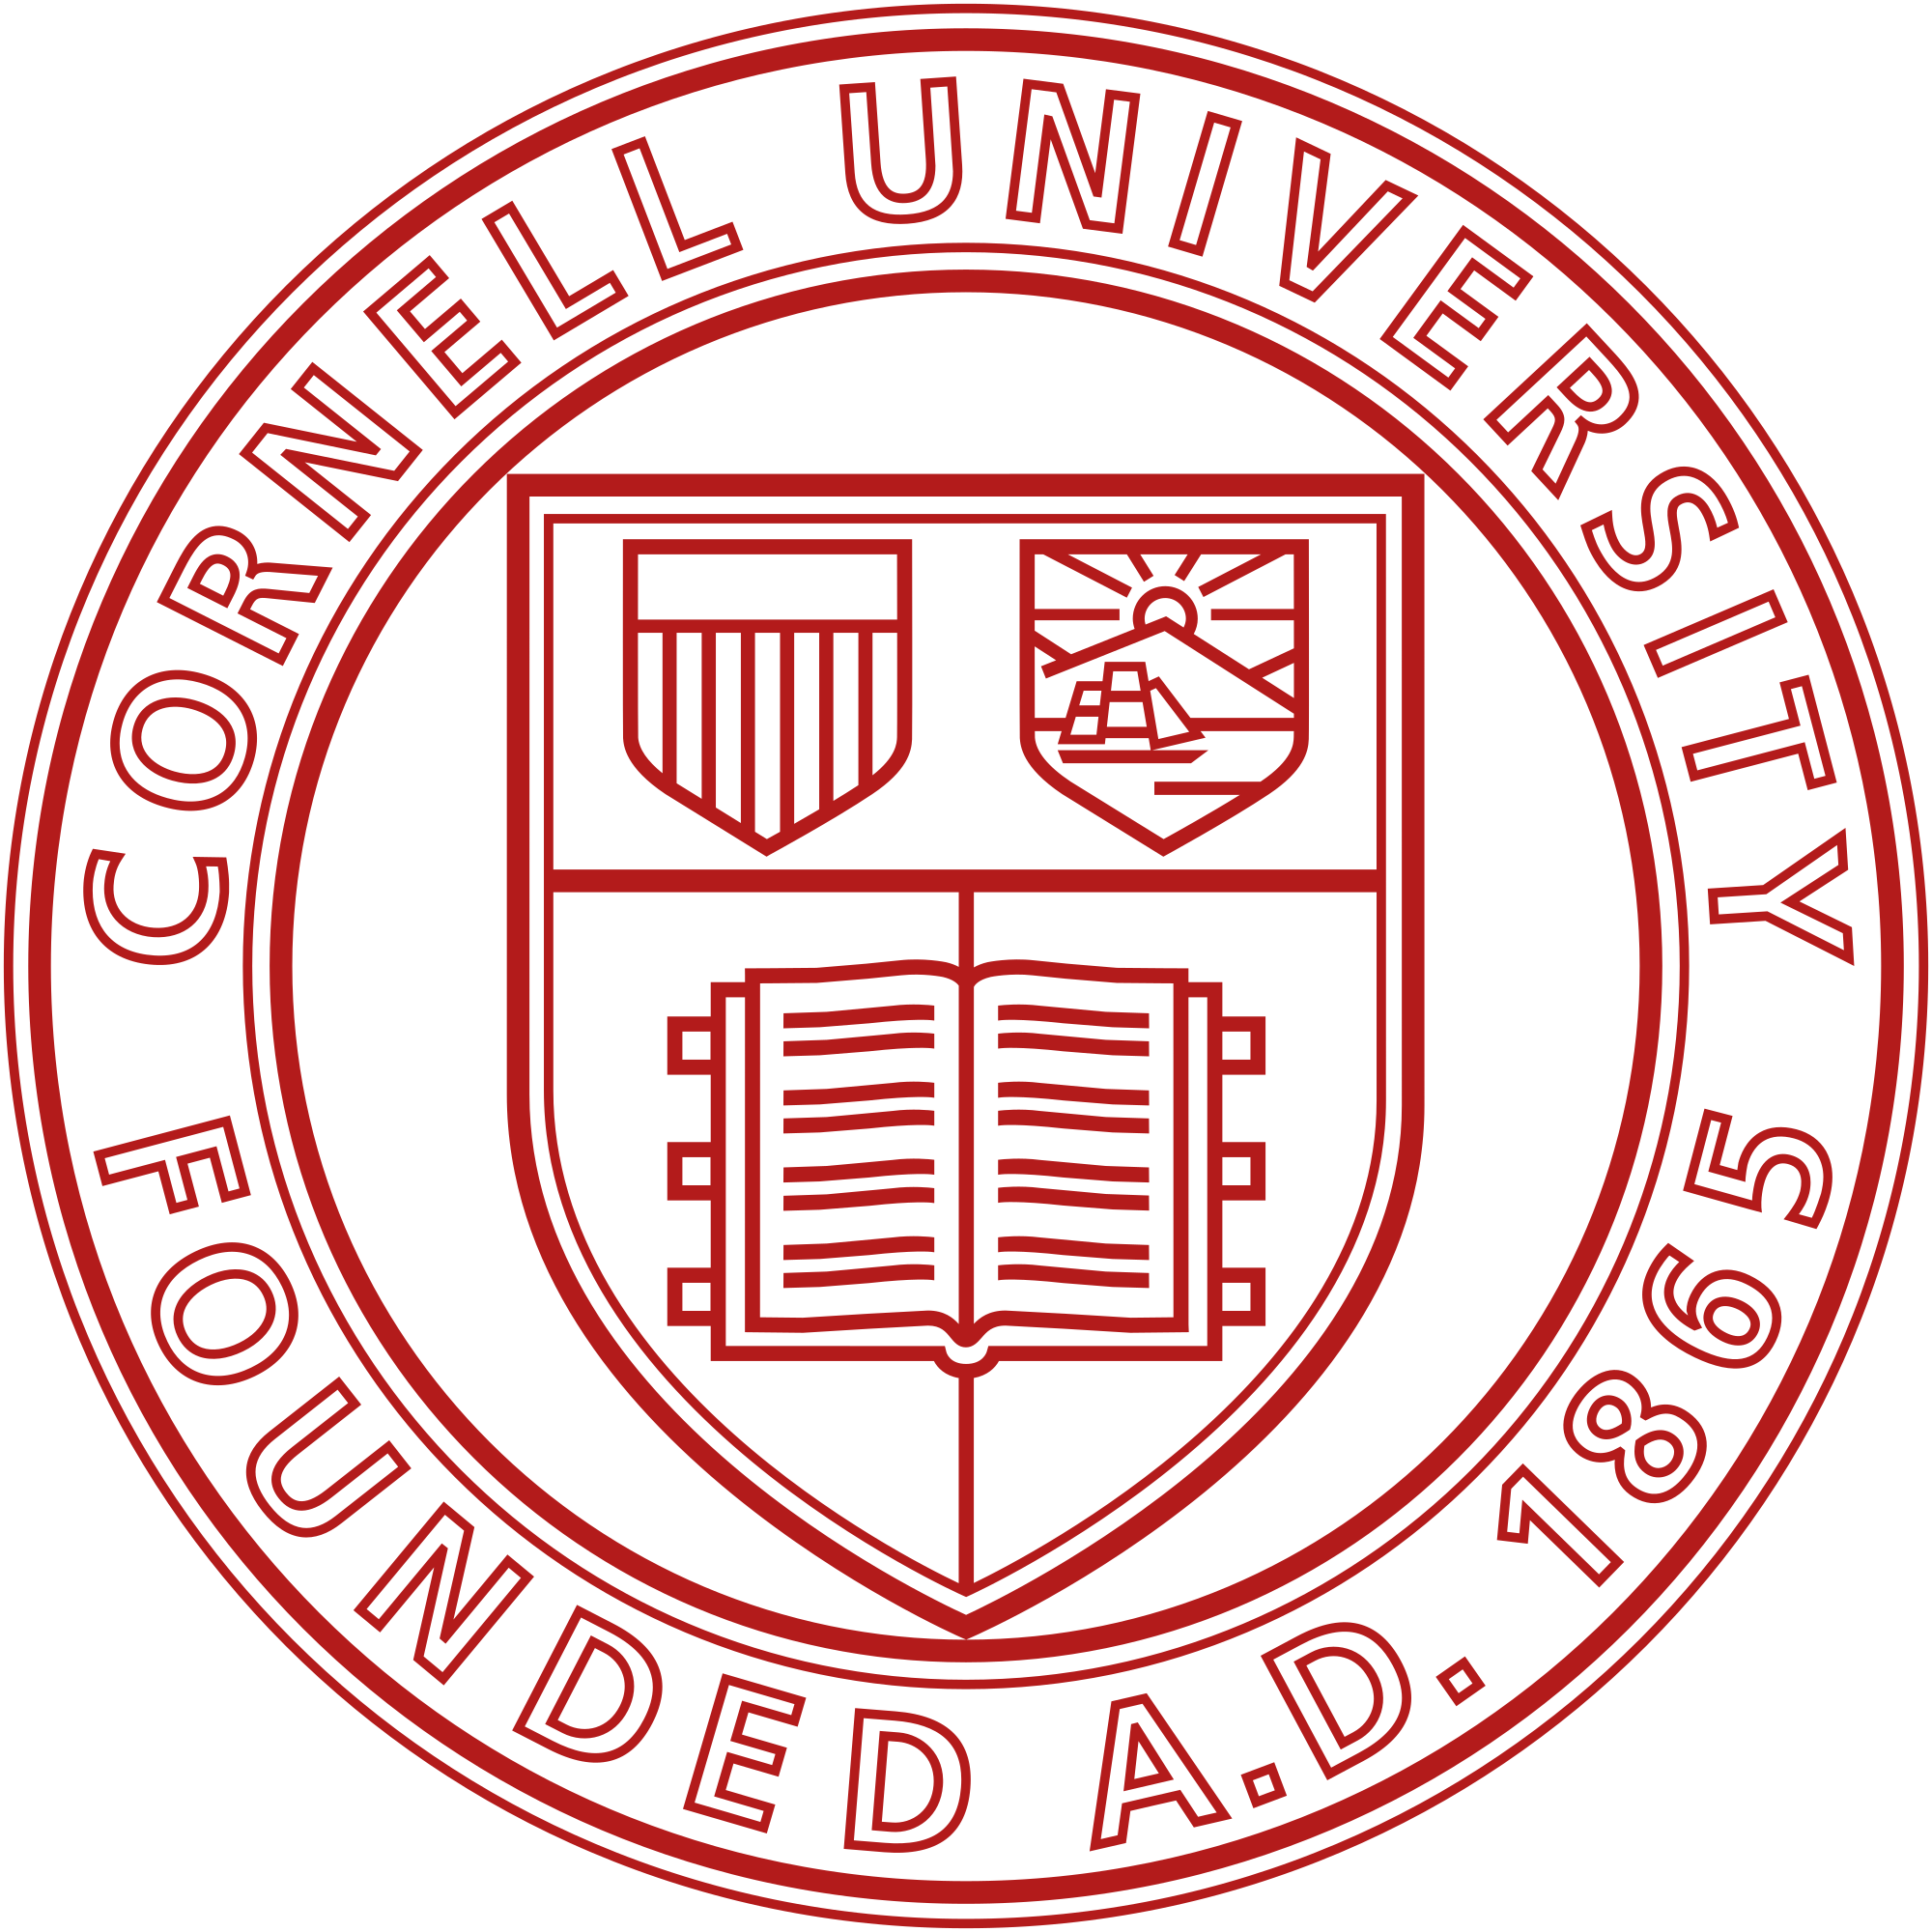 Filecornell University Sealsvg Wikimedia Commons Cornell - Weill Cornell Medical College (2180x2180)